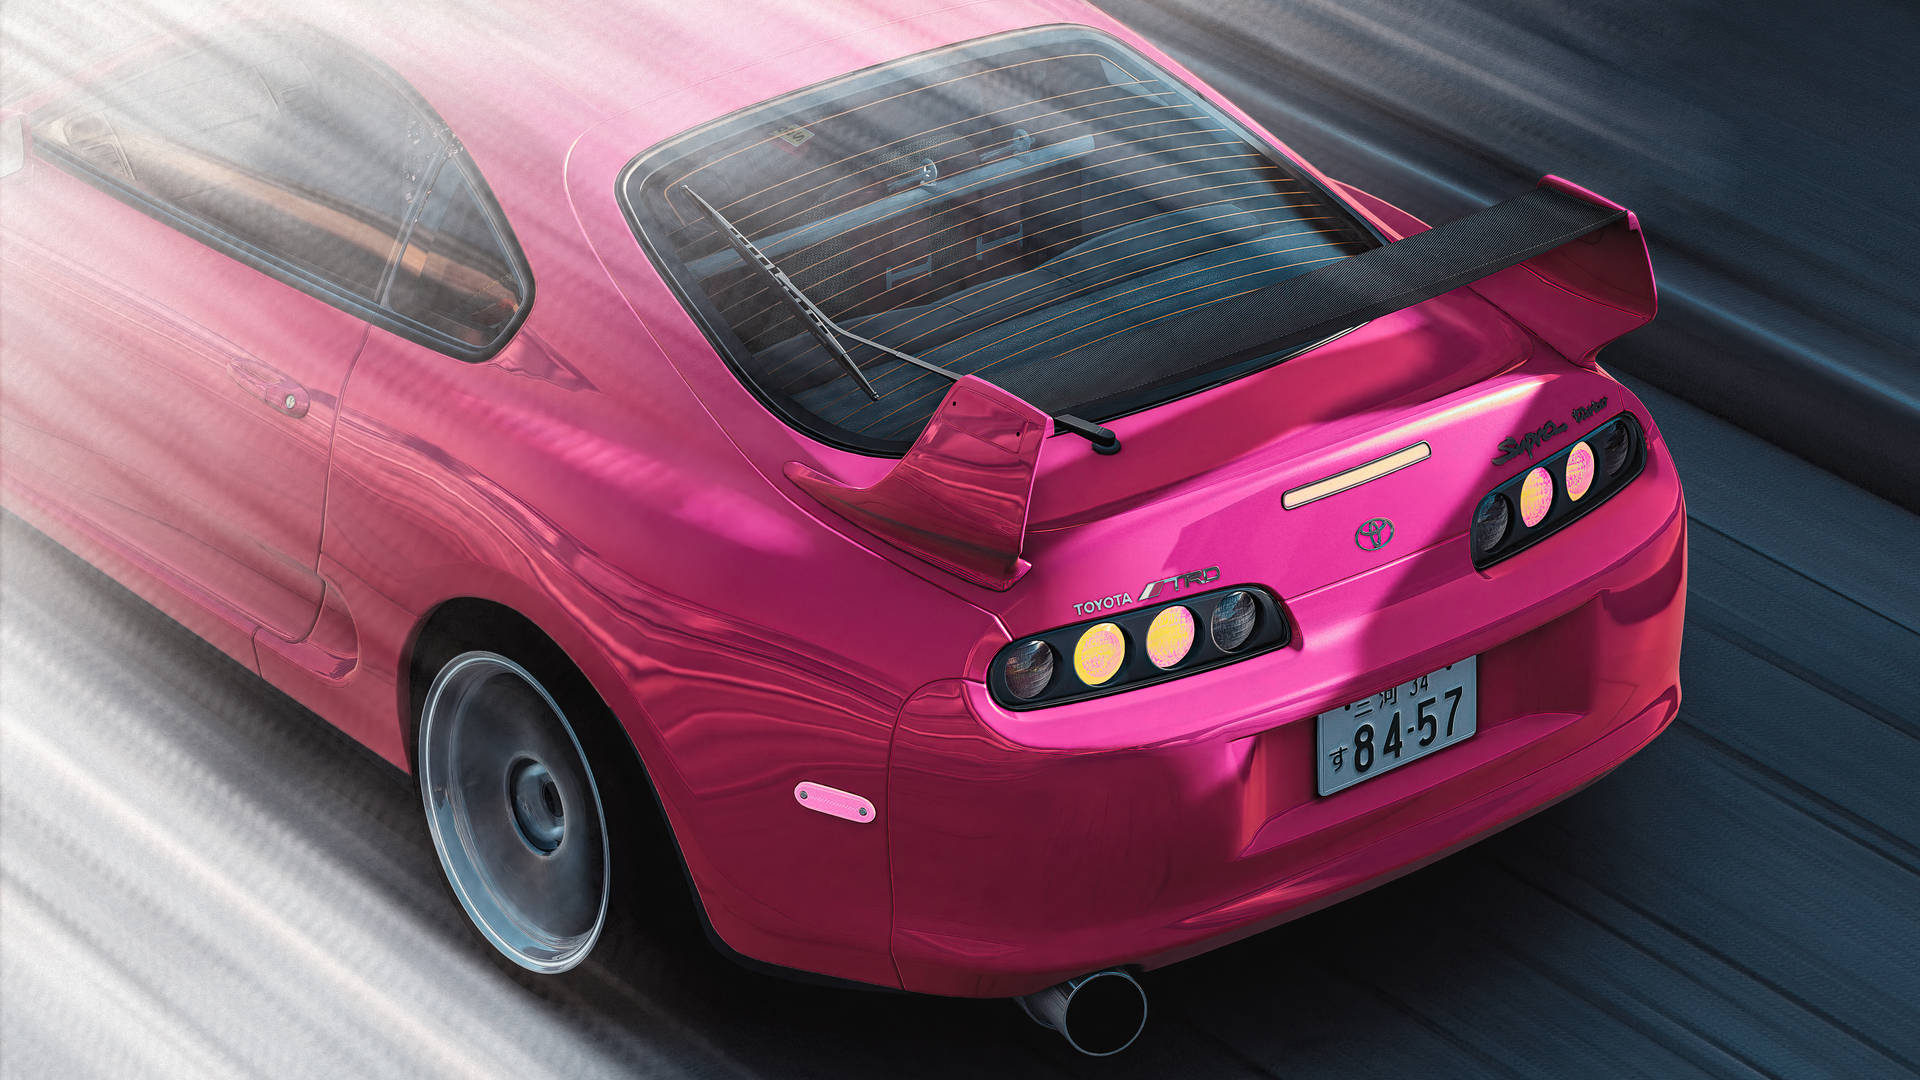 Hot Pink Toyota Supra Assetto Corsa Wallpaper